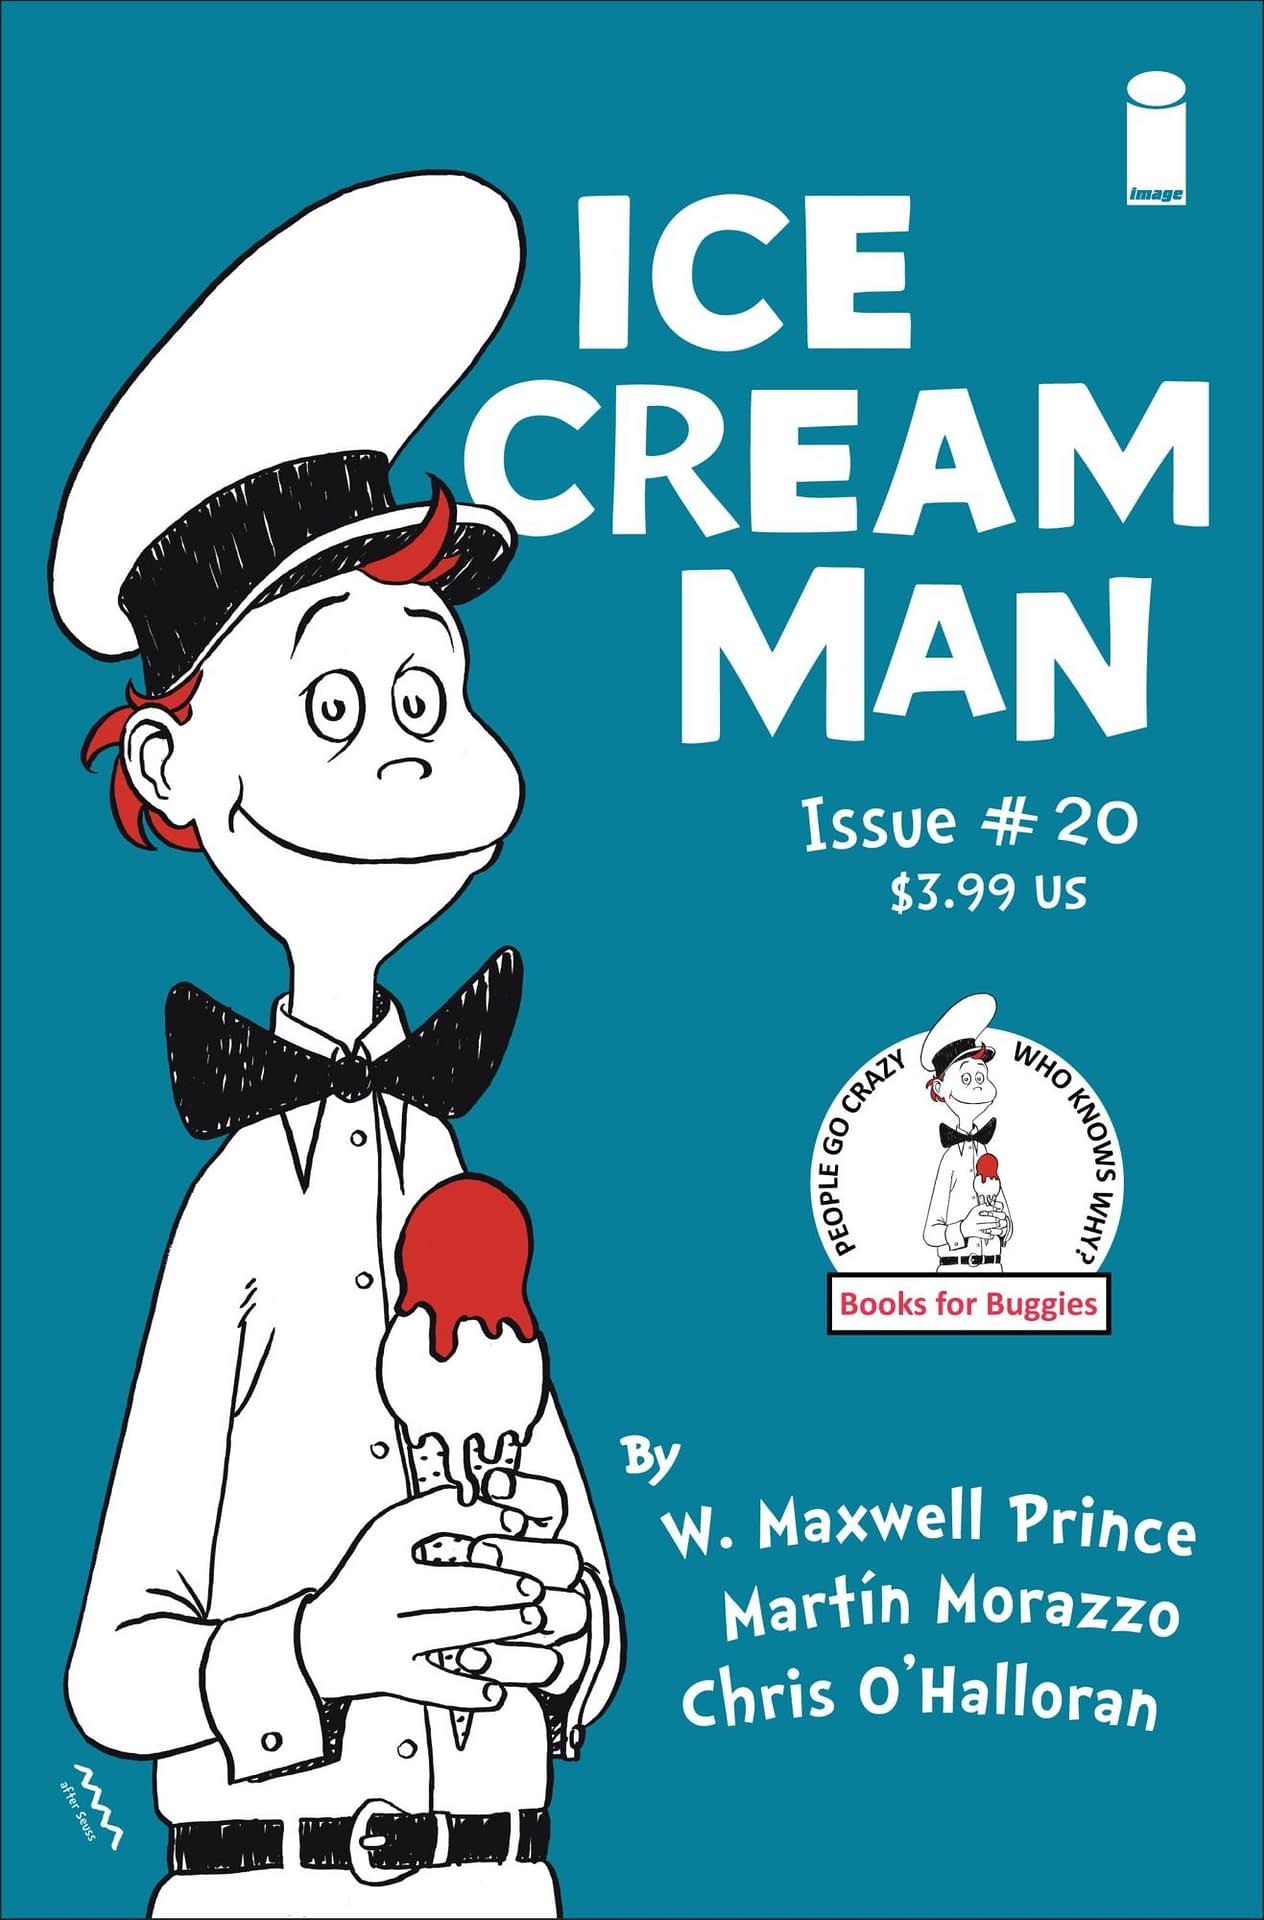 Ice Cream Man Series Adapt "Very Much Still Alive" Unlike Quibi